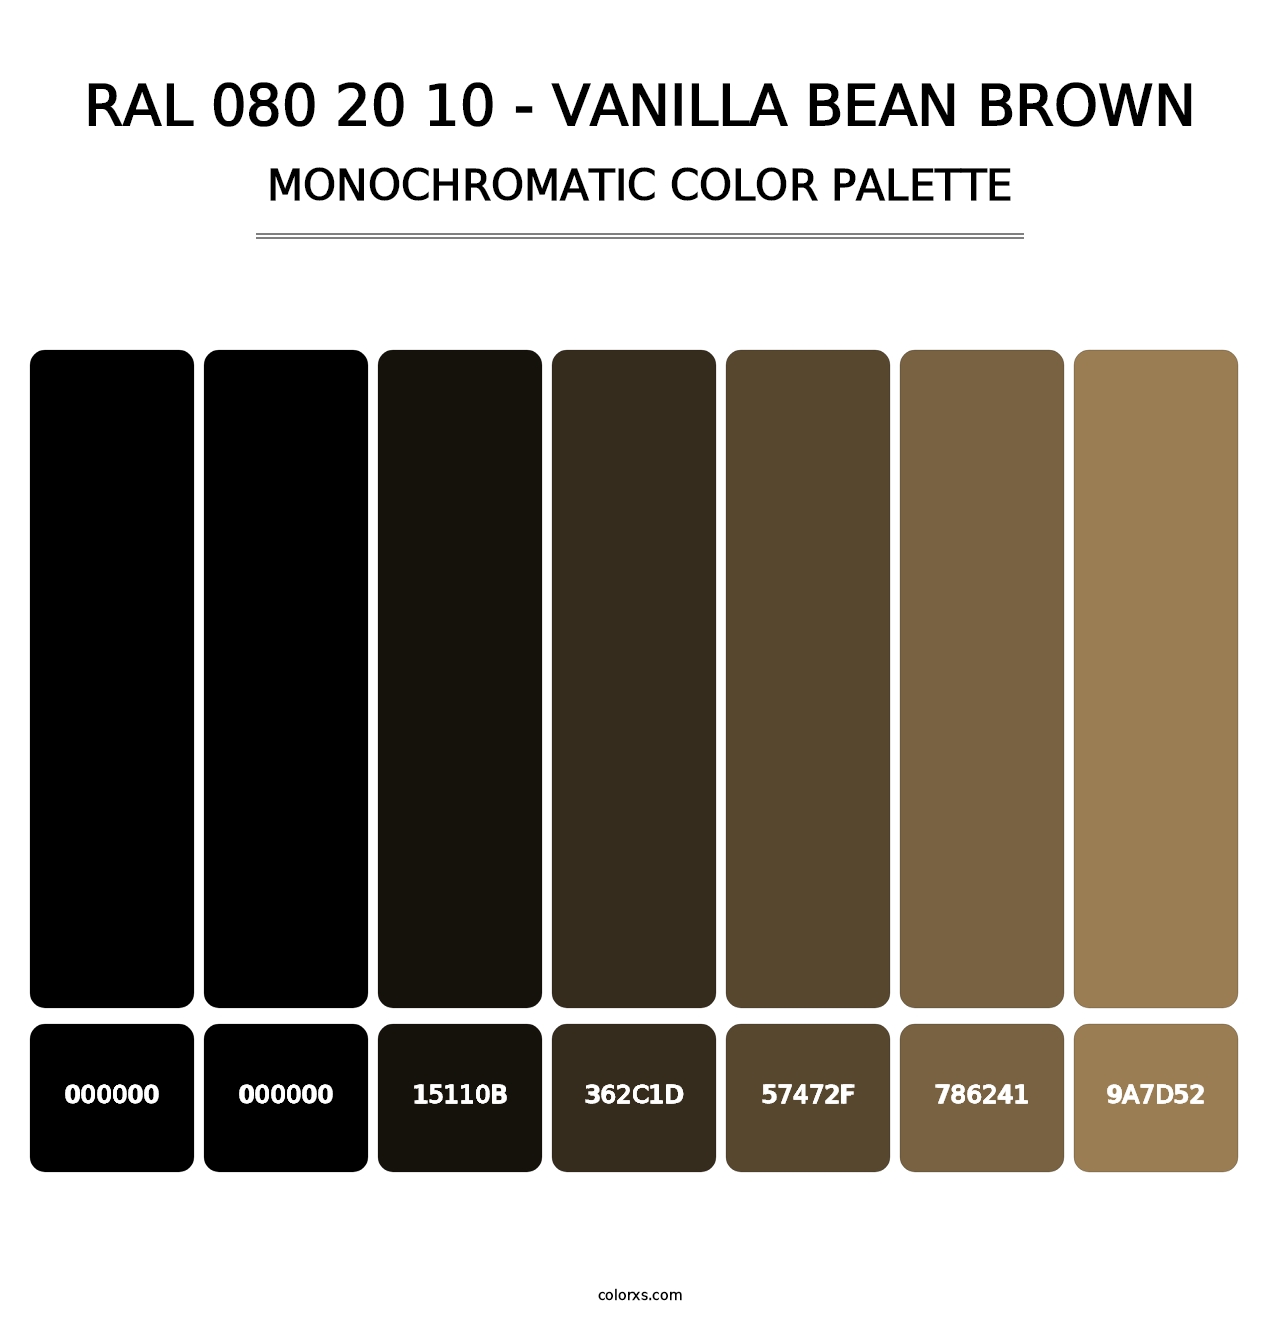 RAL 080 20 10 - Vanilla Bean Brown - Monochromatic Color Palette